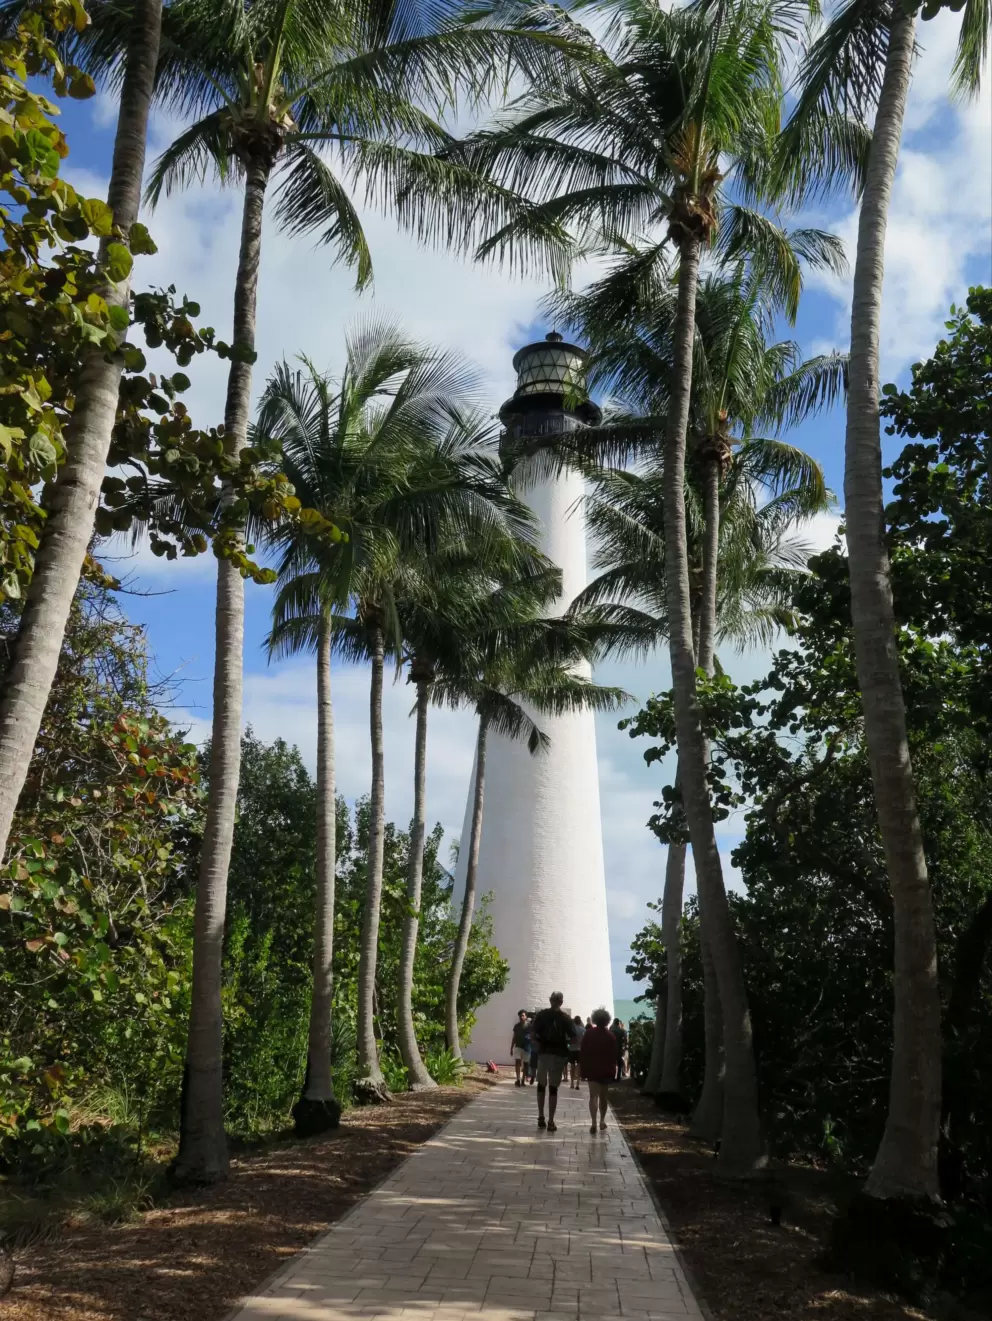 Cape Florida Lighthouse, Key Biscayne